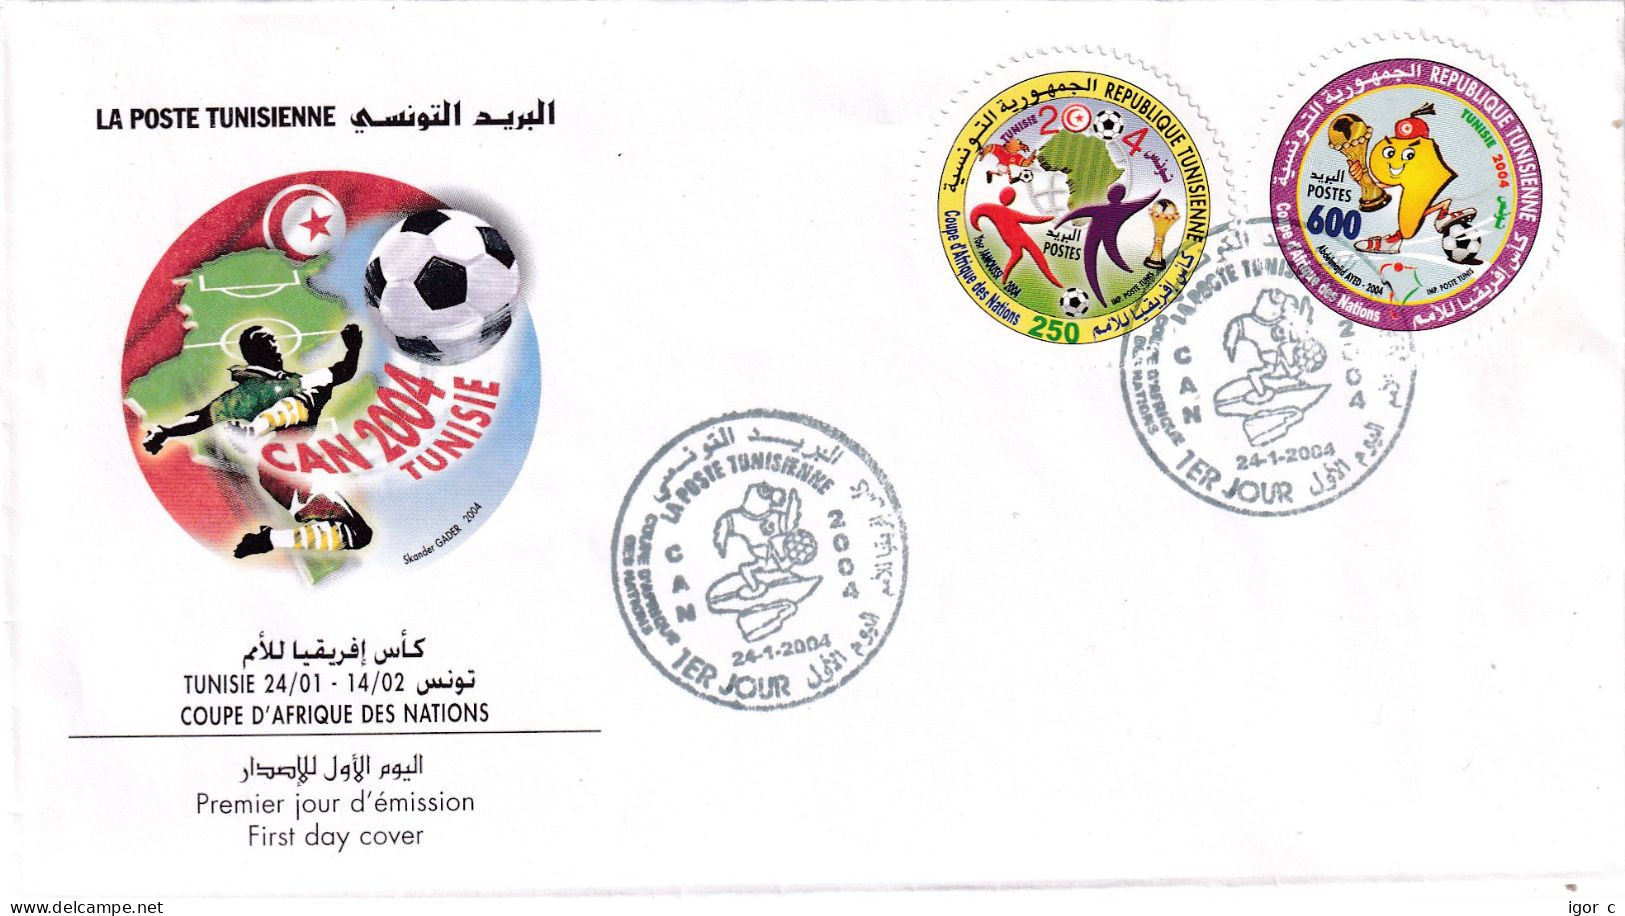 Tunis Tunisia 2004 Cover; Football Fussball Soccer Calcio; Coupe D'Afrique Des Nations - Coupe D'Afrique Des Nations